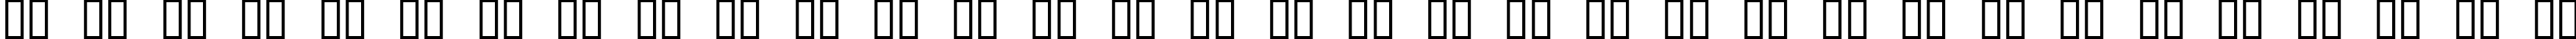 Пример написания русского алфавита шрифтом ChunkoBlocko